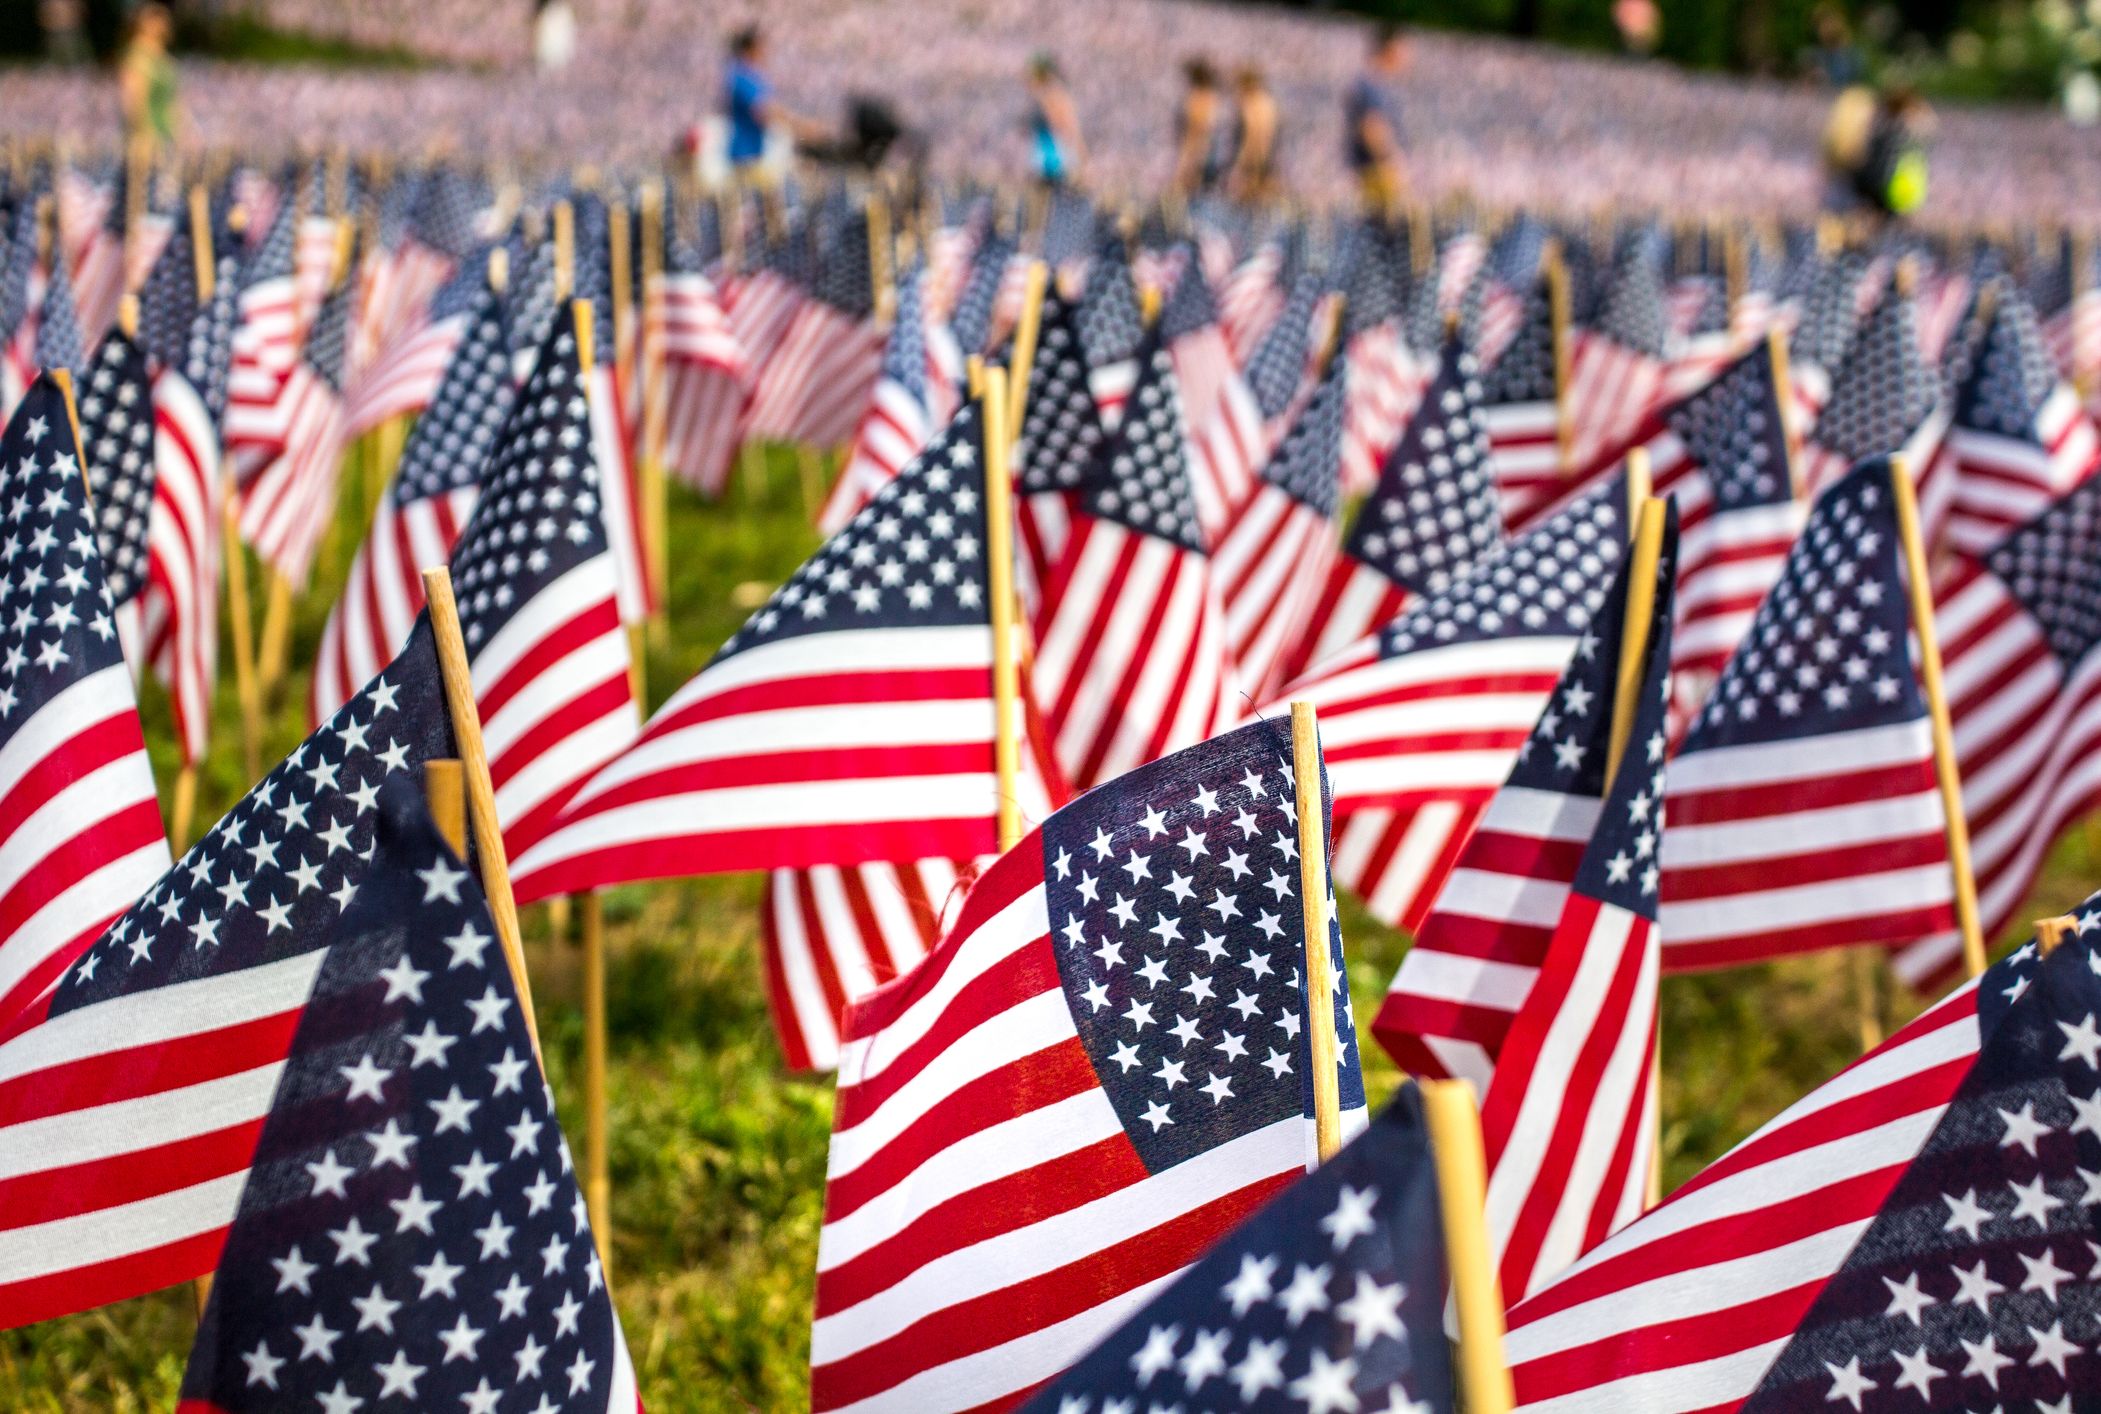 Ohio newspaper seeking veterans for Memorial Day features